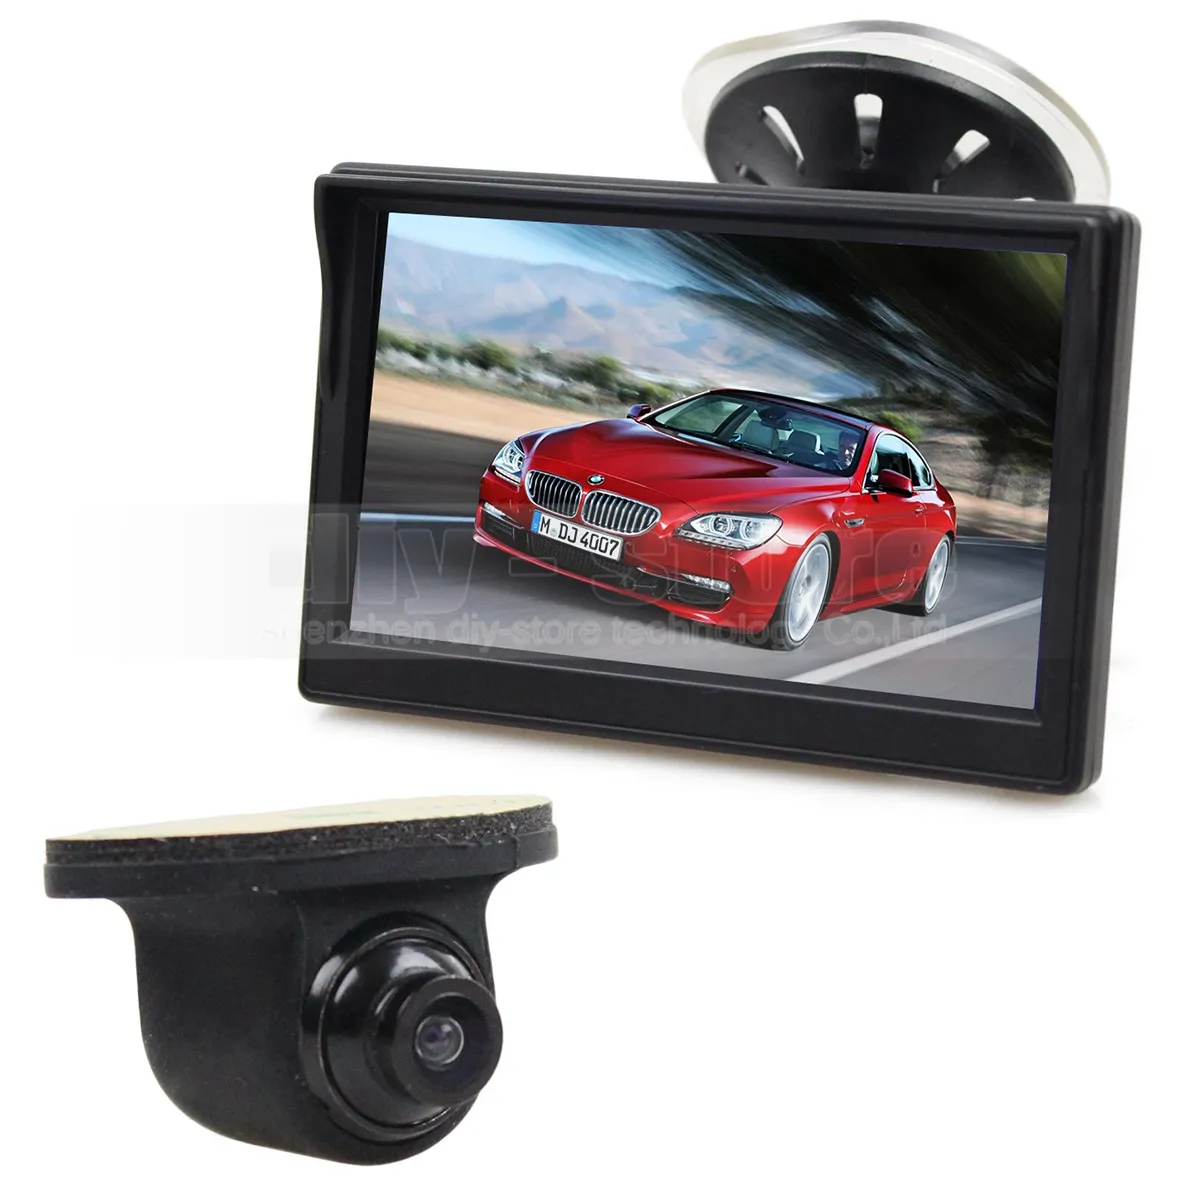 5-Zoll-LCD-Rückfahrkamera-Monitor + wasserdichte CCD-Farb-Rückfahrkamera für das Einparkhilfesystem